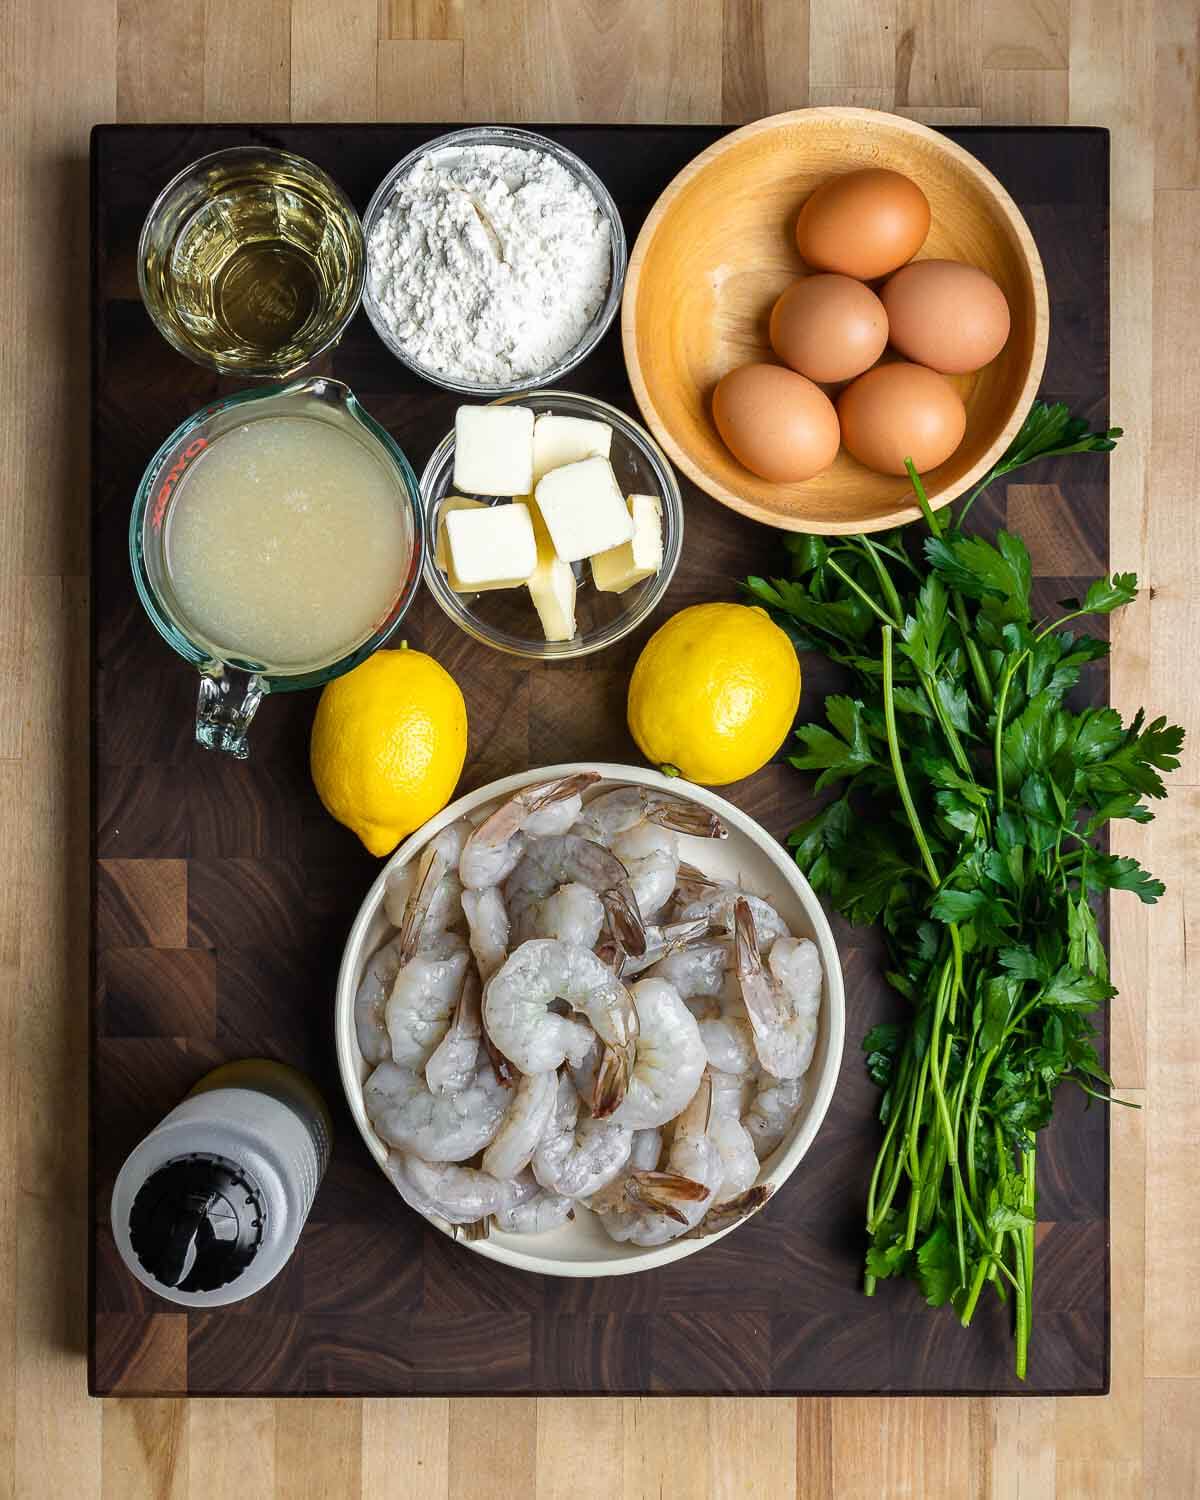 Ingredients shown: white wine, flour, eggs, chicken stock, butter, lemons, parsley, olive oil, and shrimp.